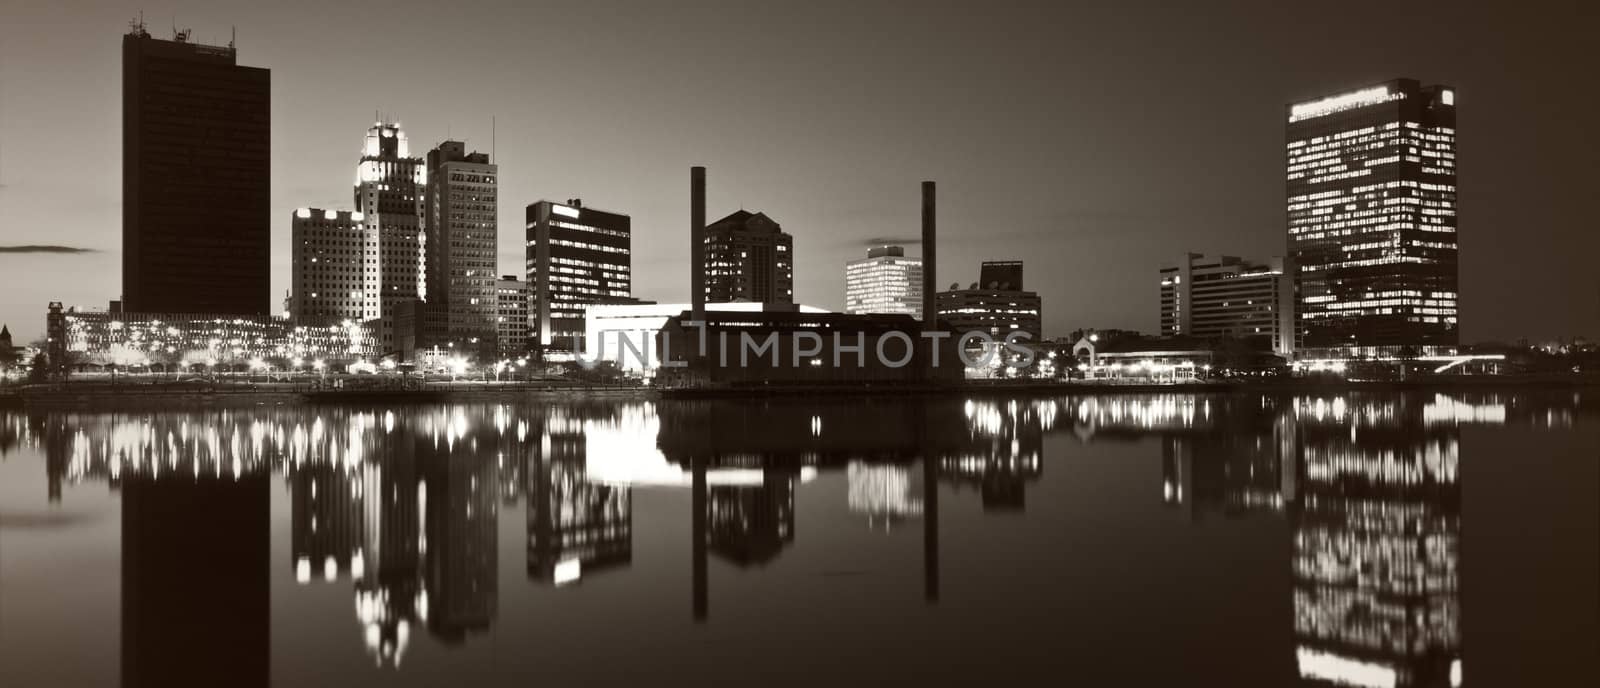 Panoramic Toledo - black and white photo of the city